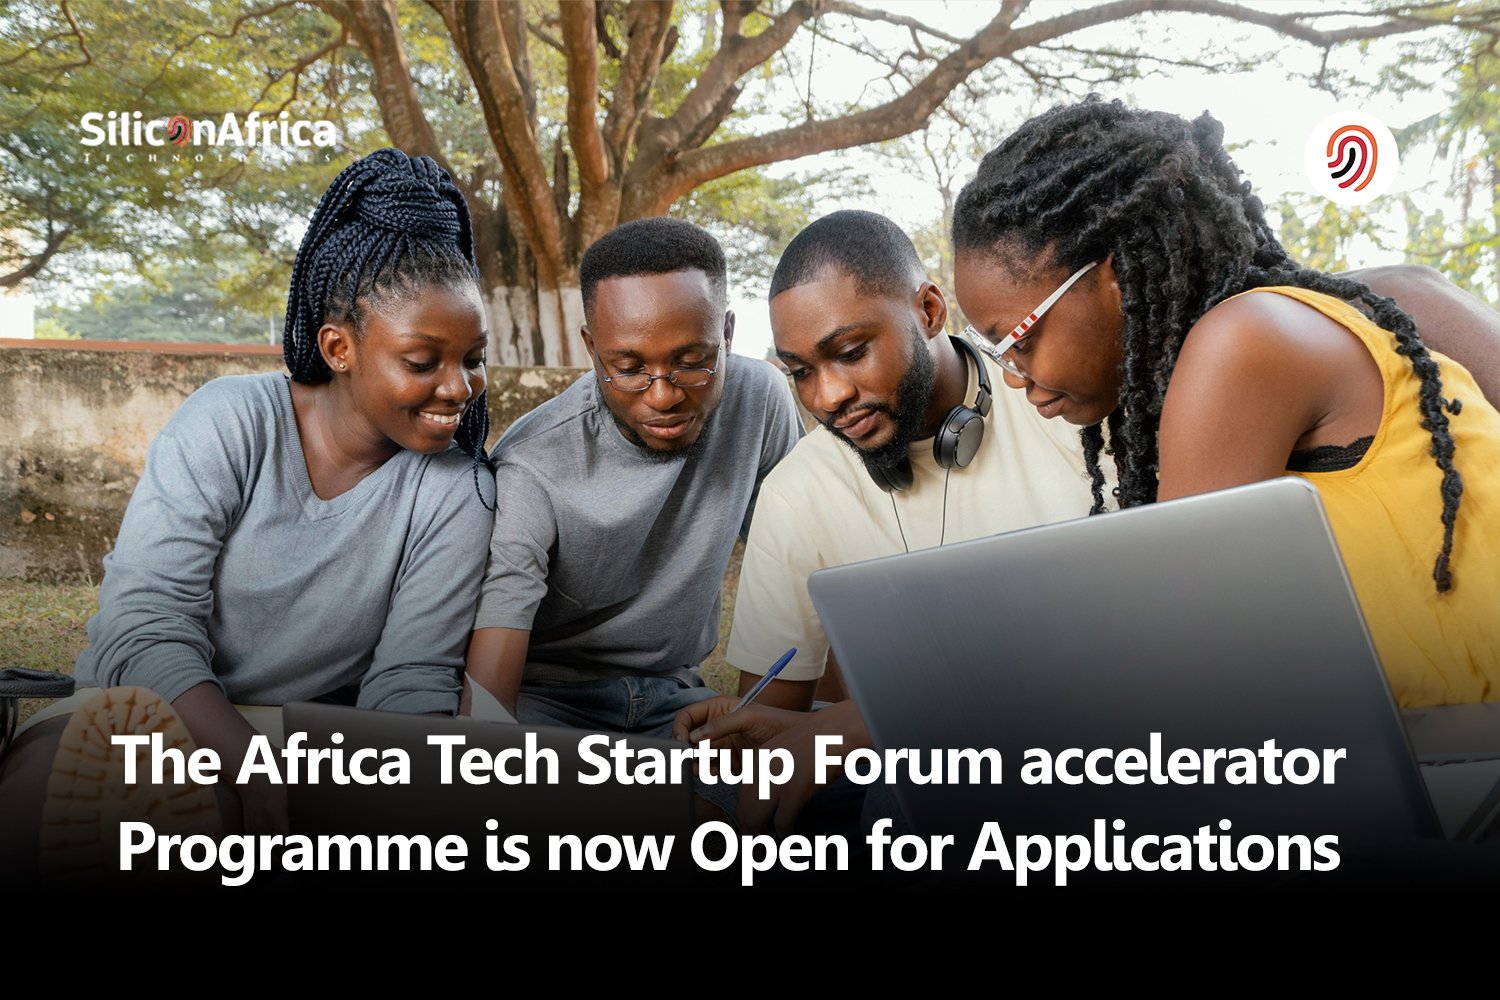 The Africa Tech Startup forum